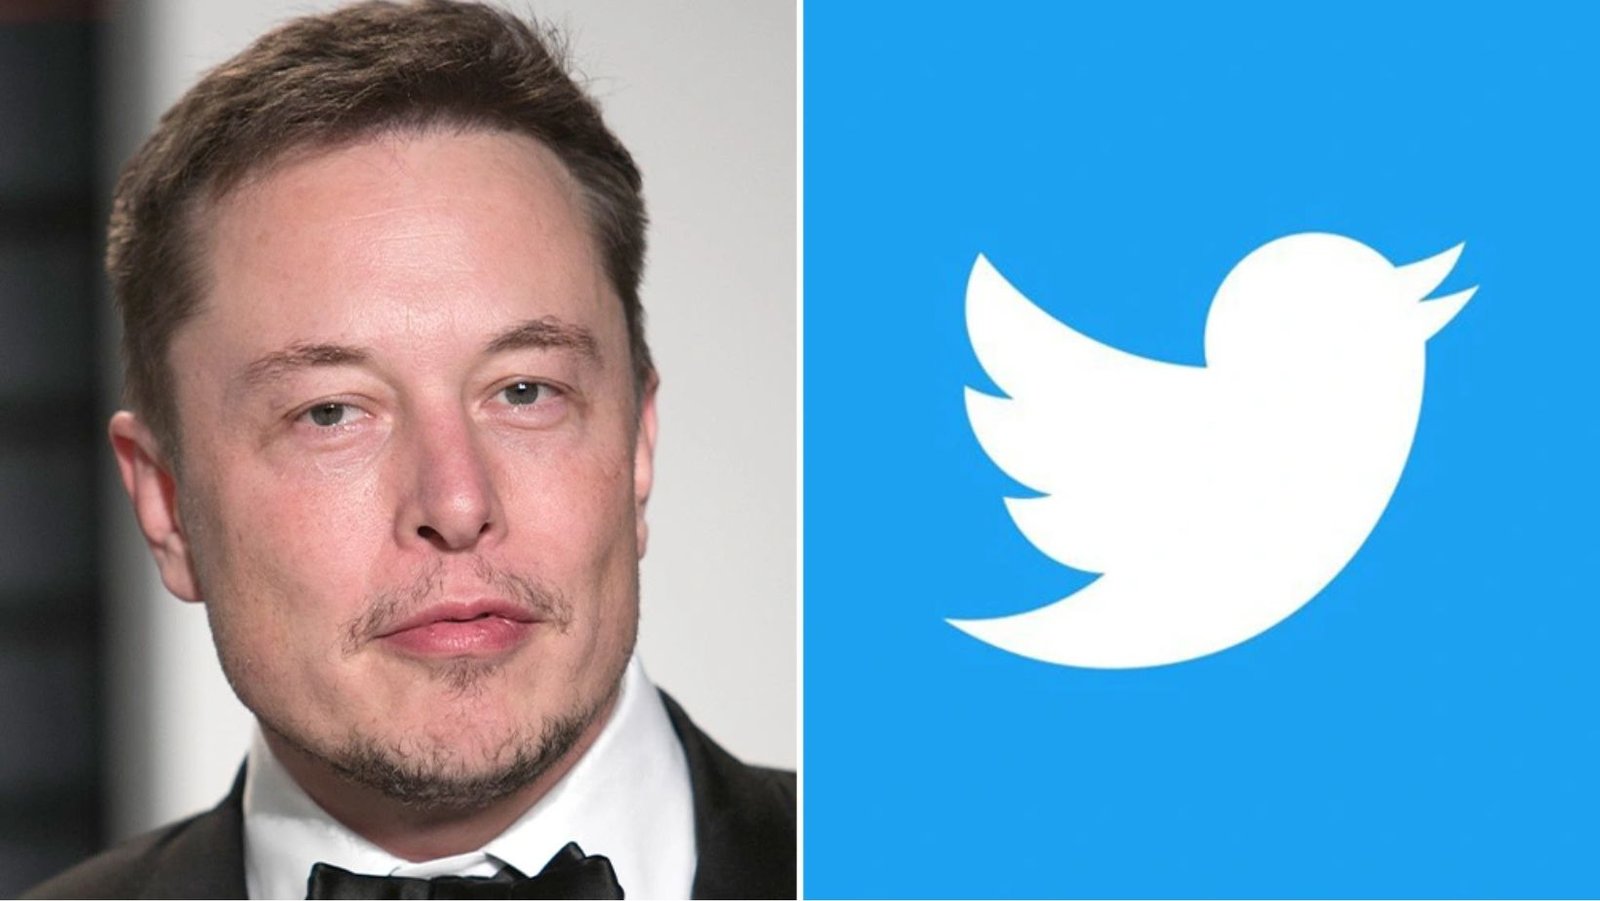 Elon Musk's $44 billion deal is finally approved by Twitter